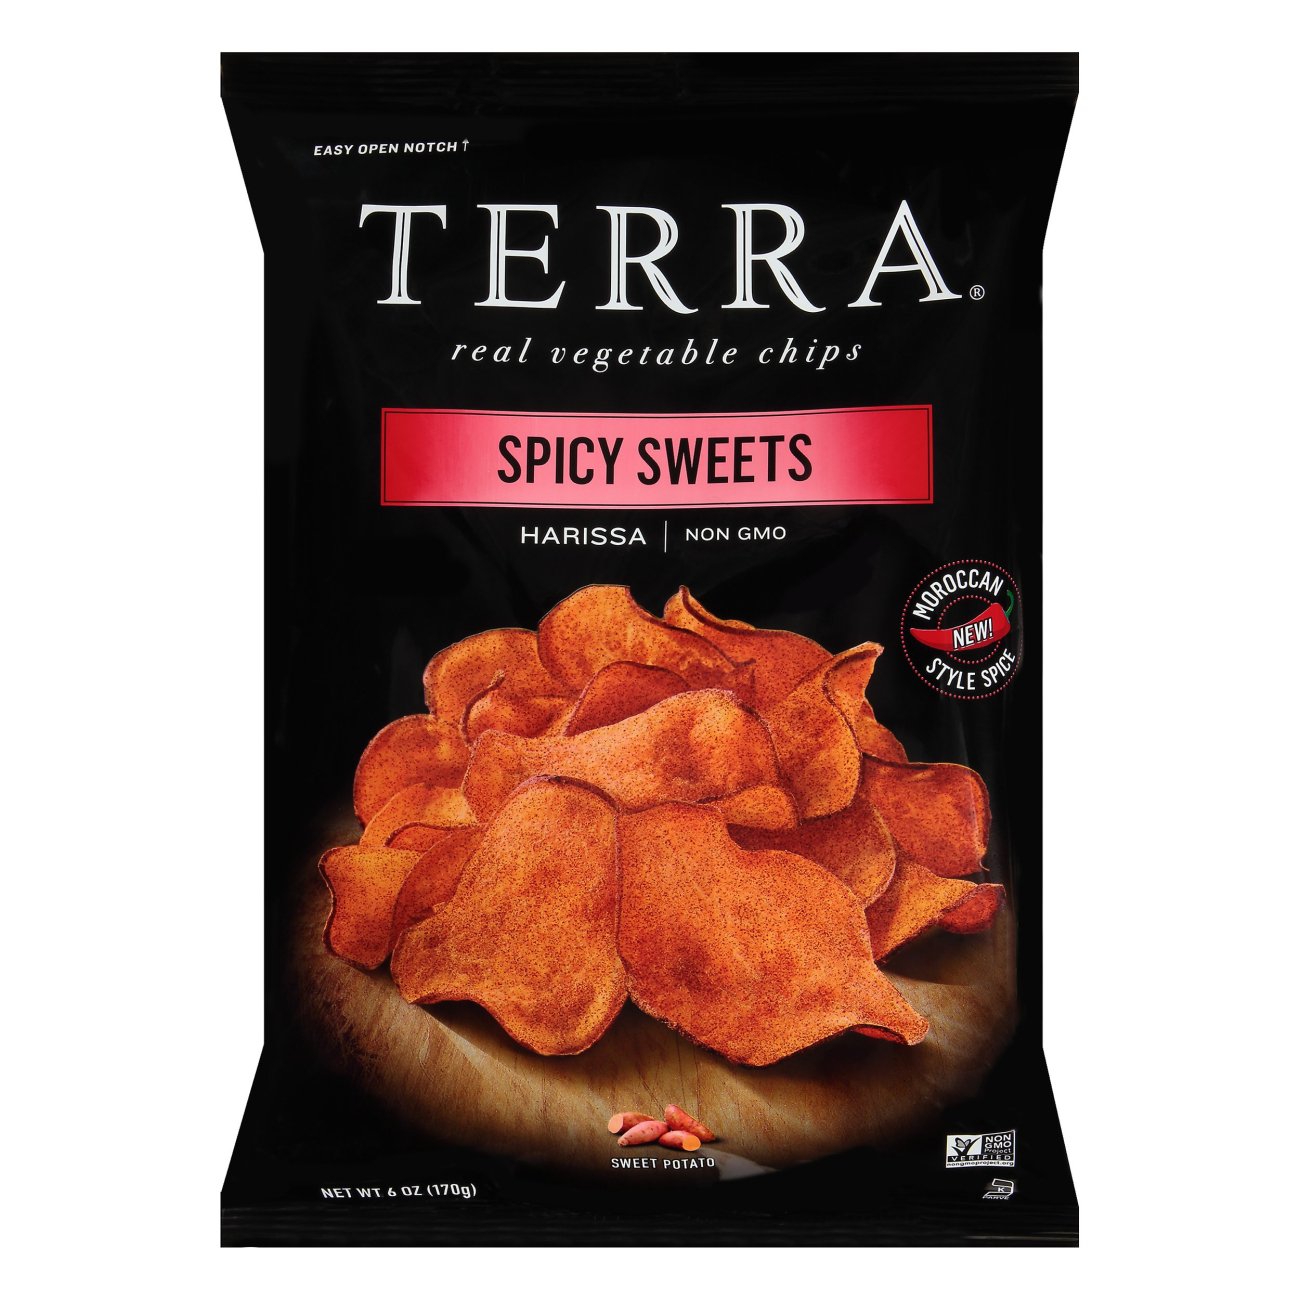 Terra Spiced Sweet Potato Chips Shop Terra Spiced Sweet Potato Chips Shop Terra Spiced Sweet Potato Chips Shop Terra Spiced Sweet Potato Chips Shop At H E B At H E B